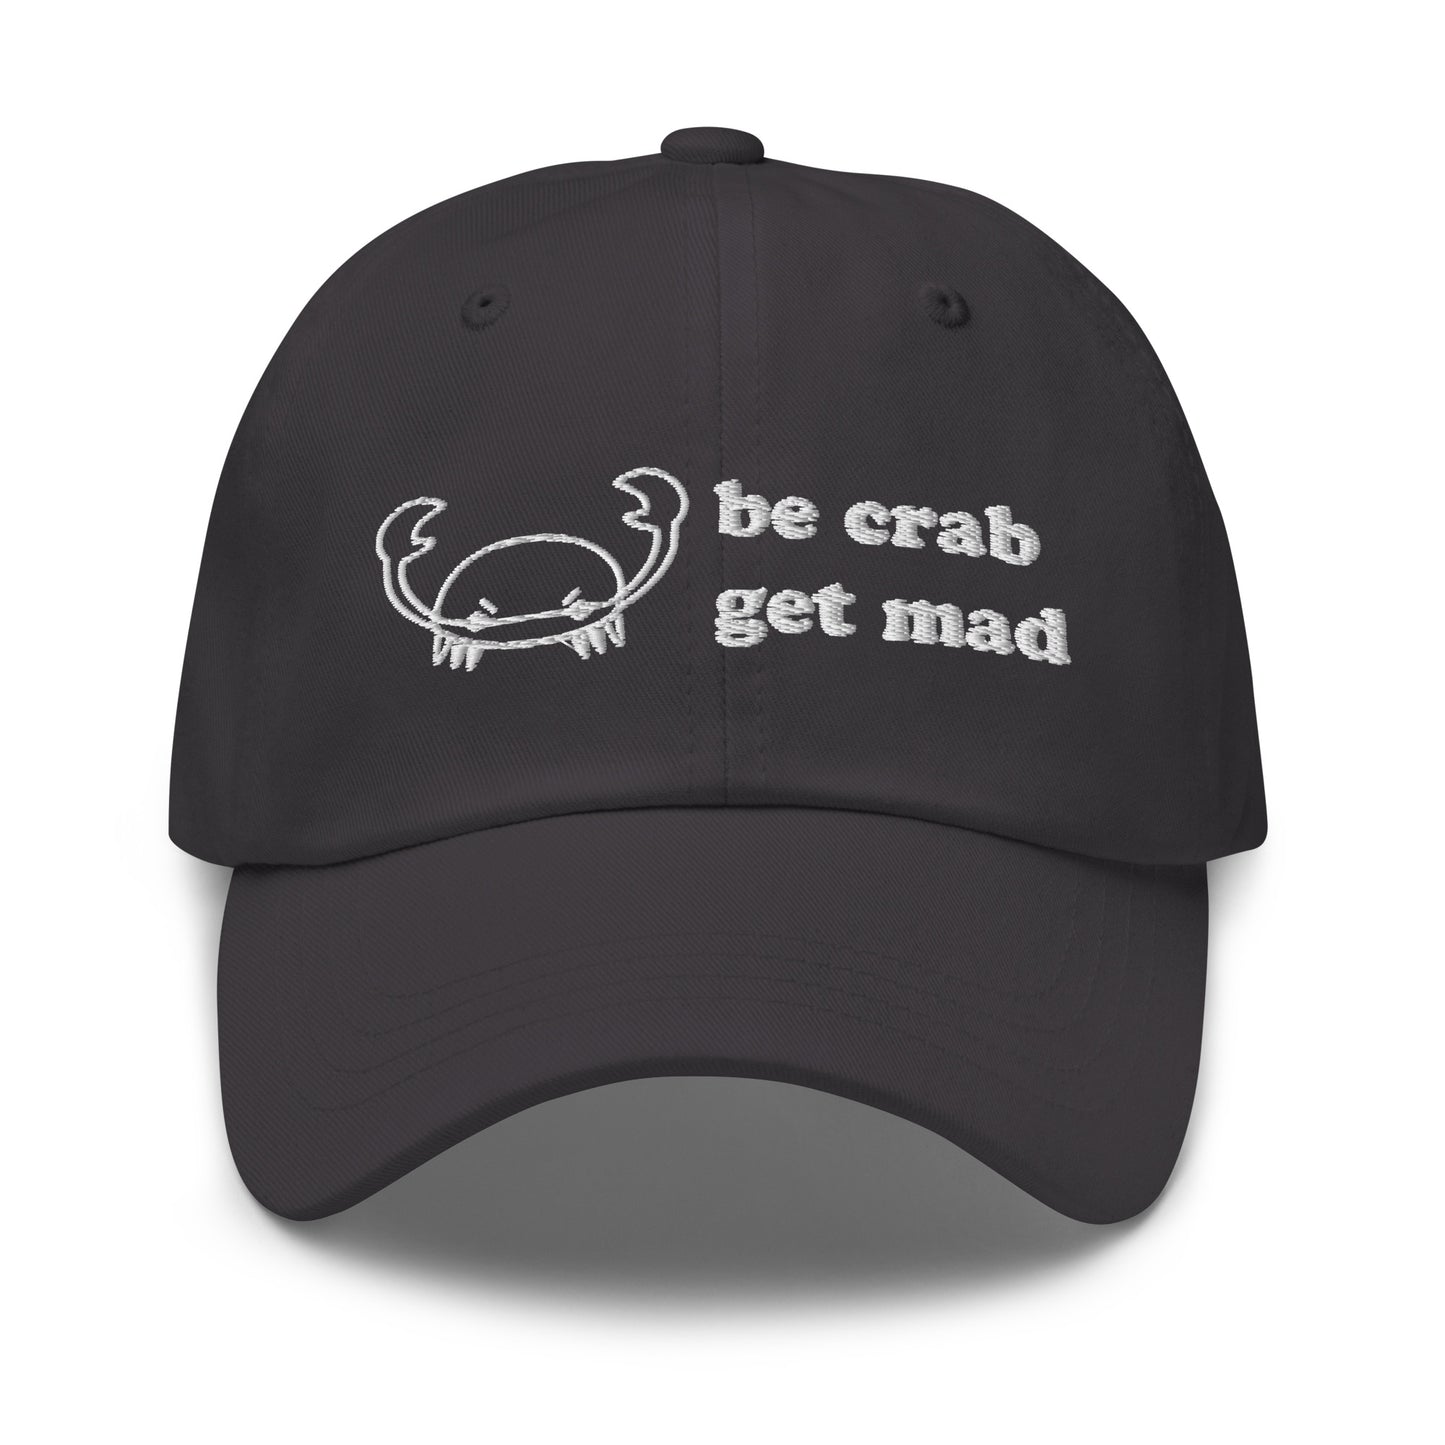 Be Crab hat